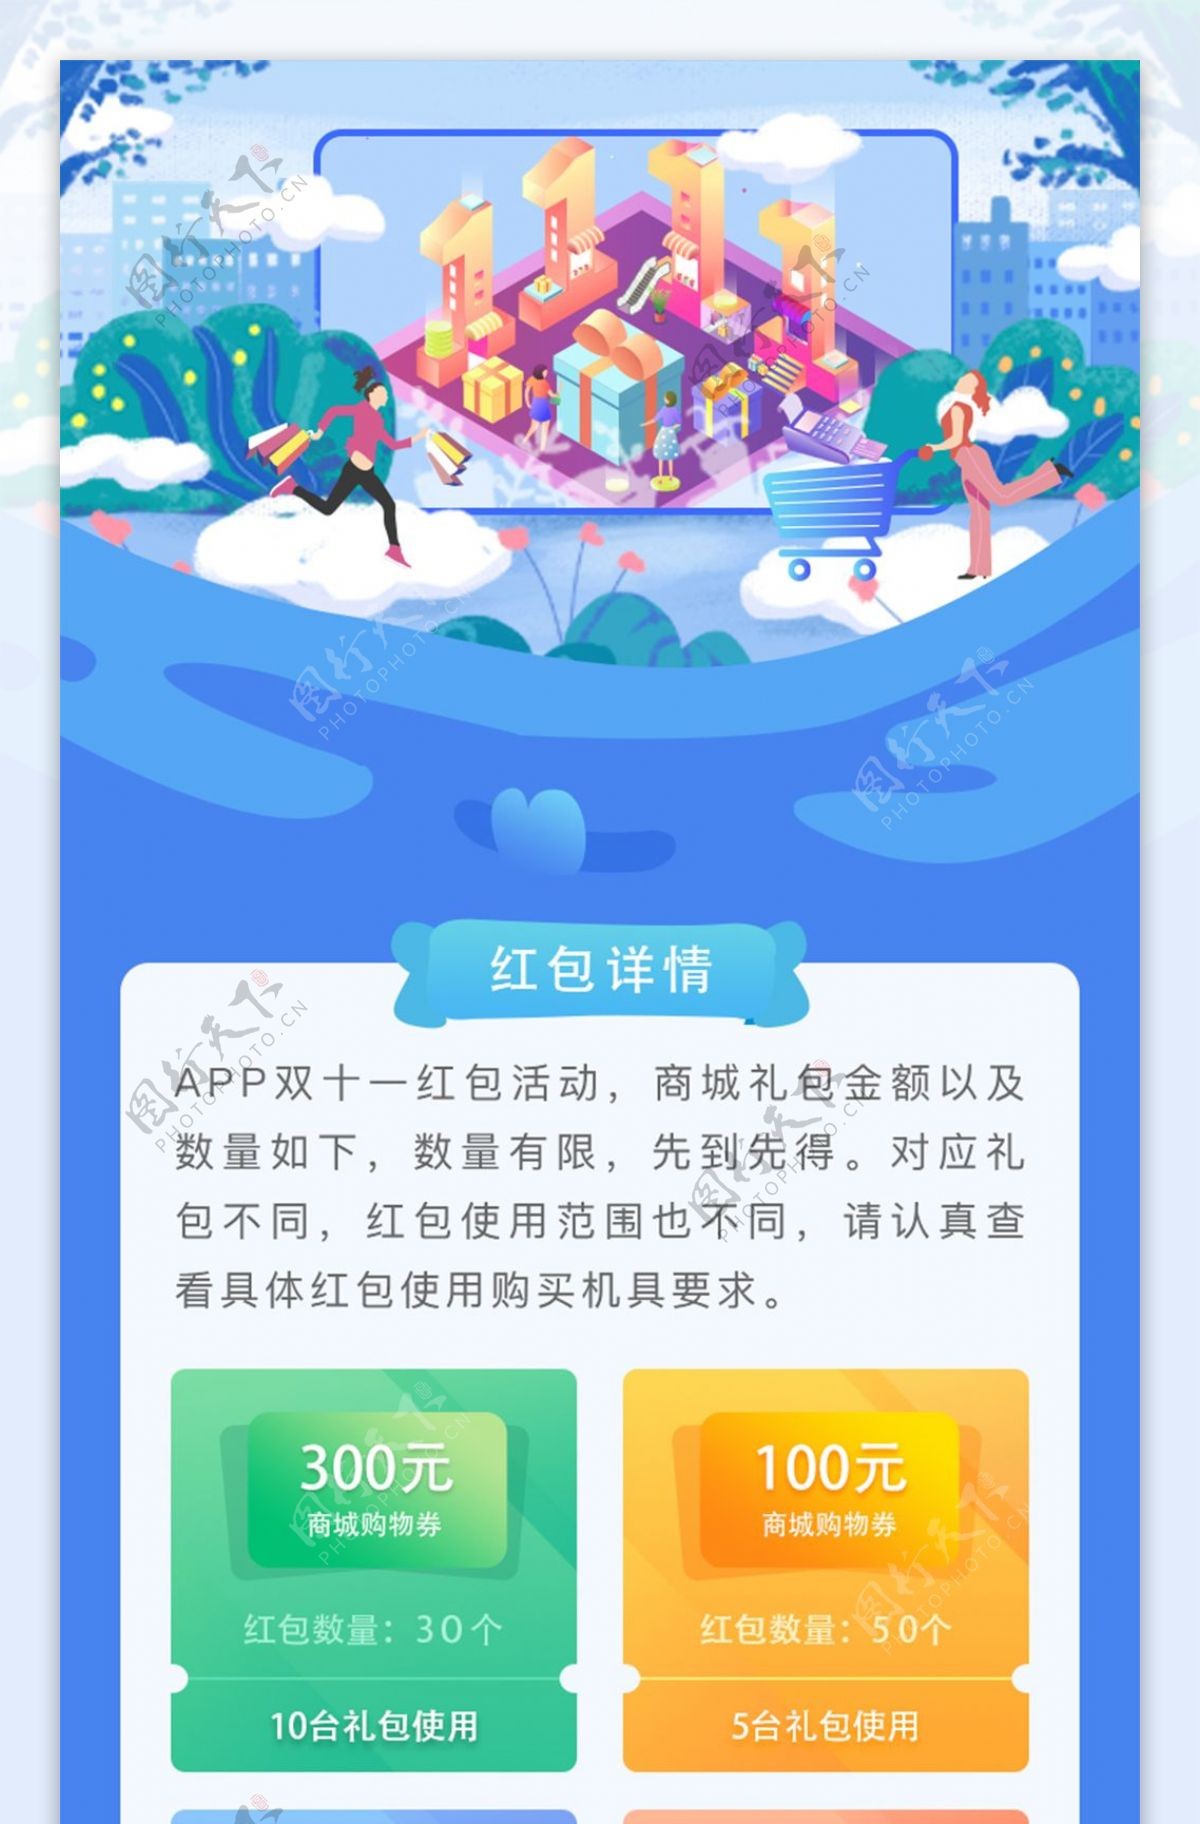 app双十一商城活动图